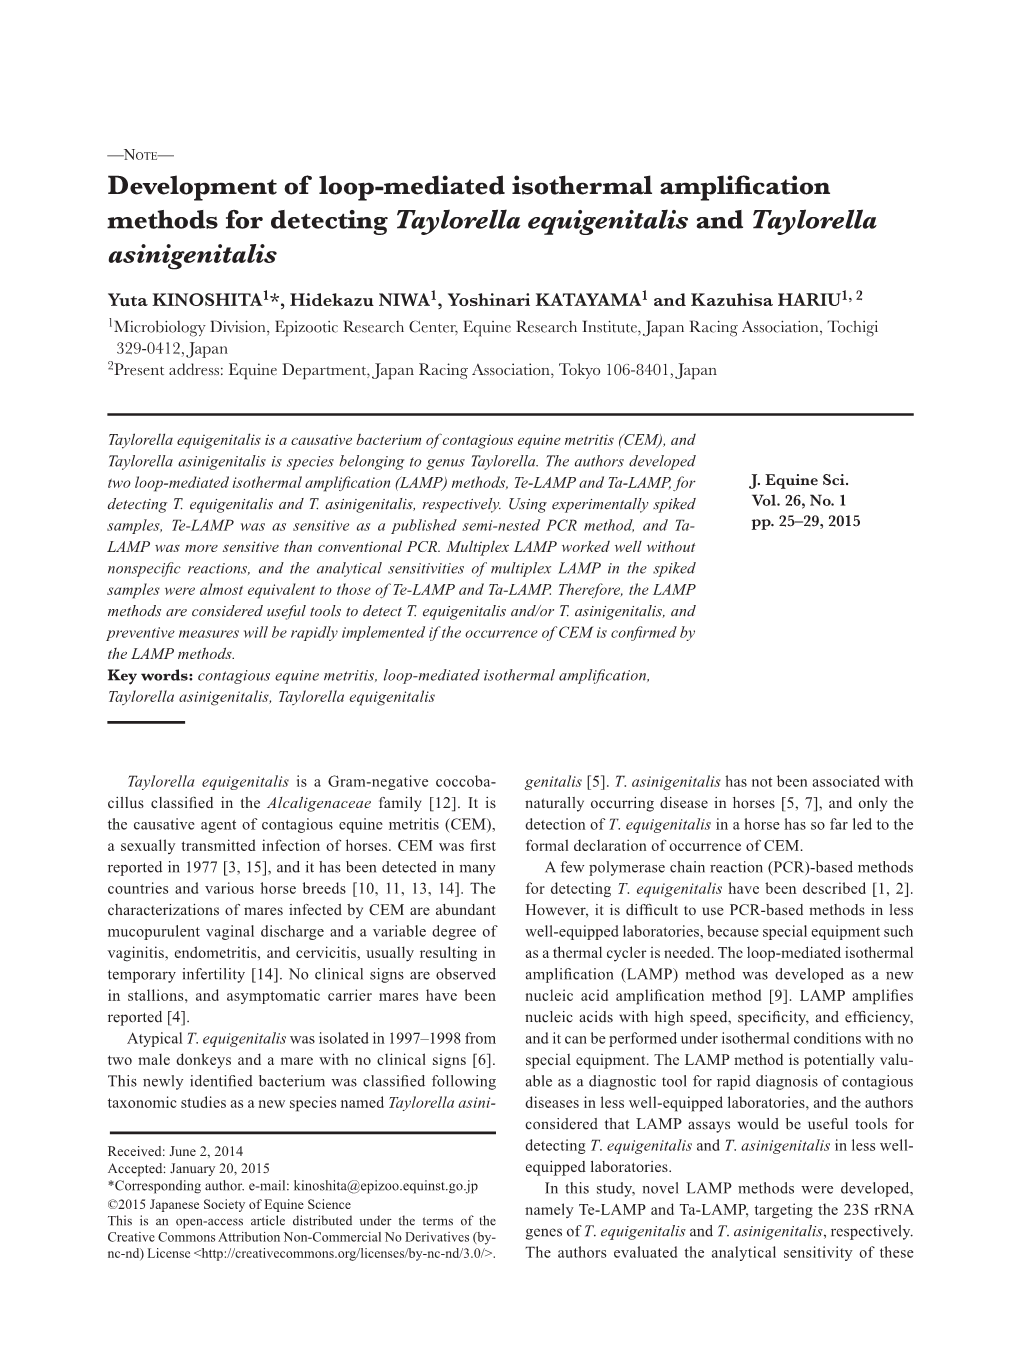 Development of Loop-Mediated Isothermal Amplification Methods for Detecting Taylorella Equigenitalis and Taylorella Asinigenitalis